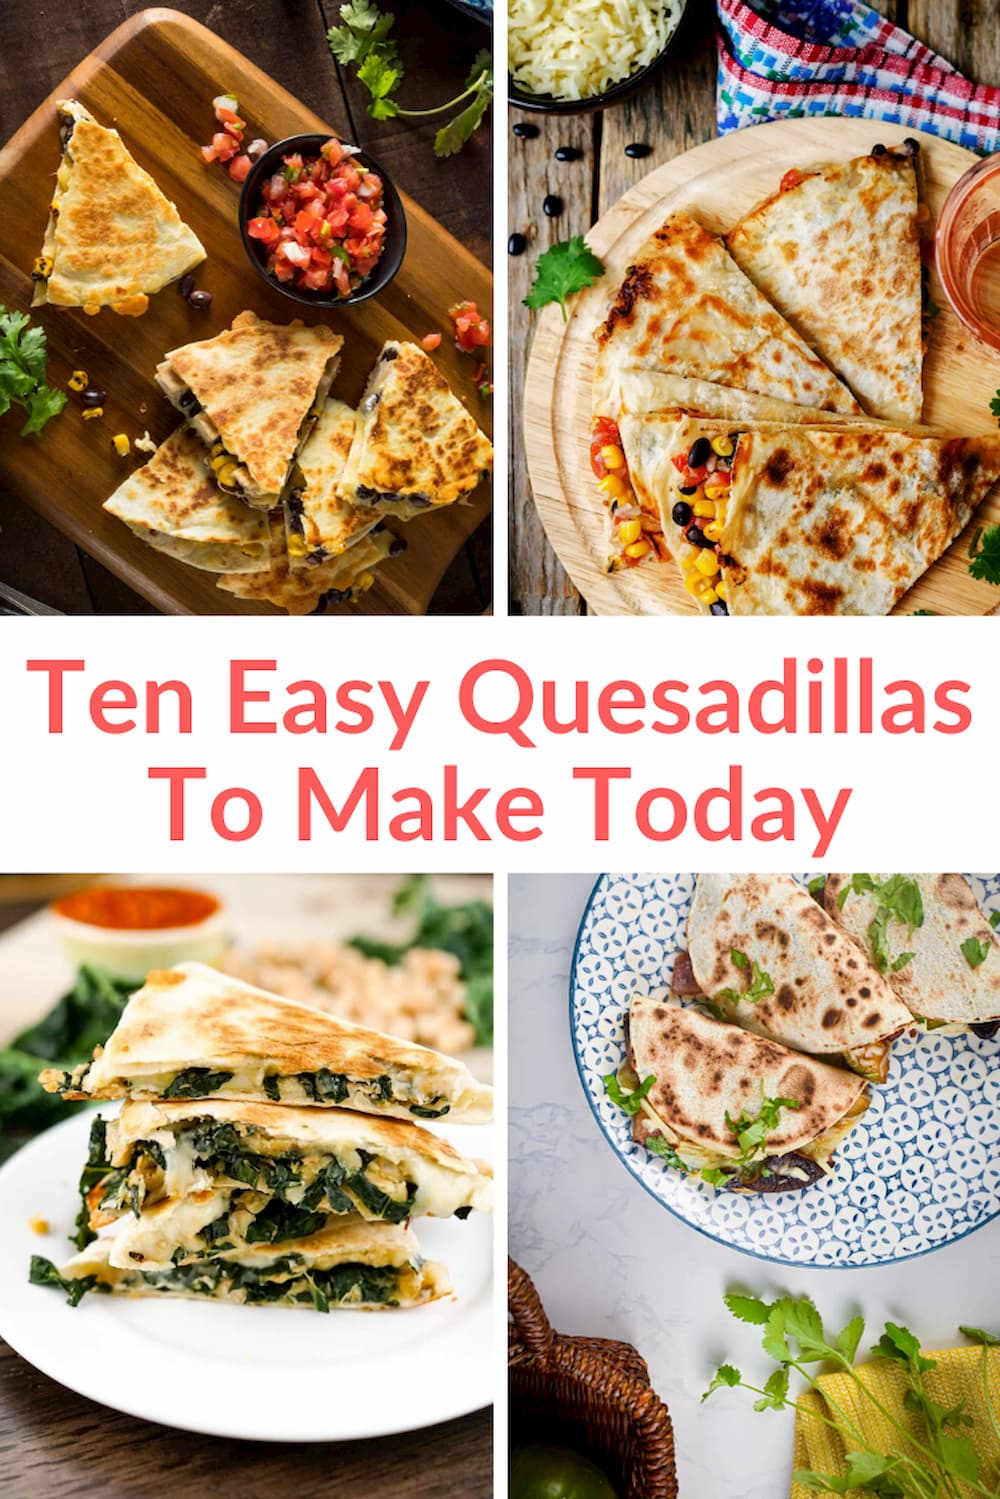 Ten Easy Quesadillas Recipes To Make Today - Slender Kitchen